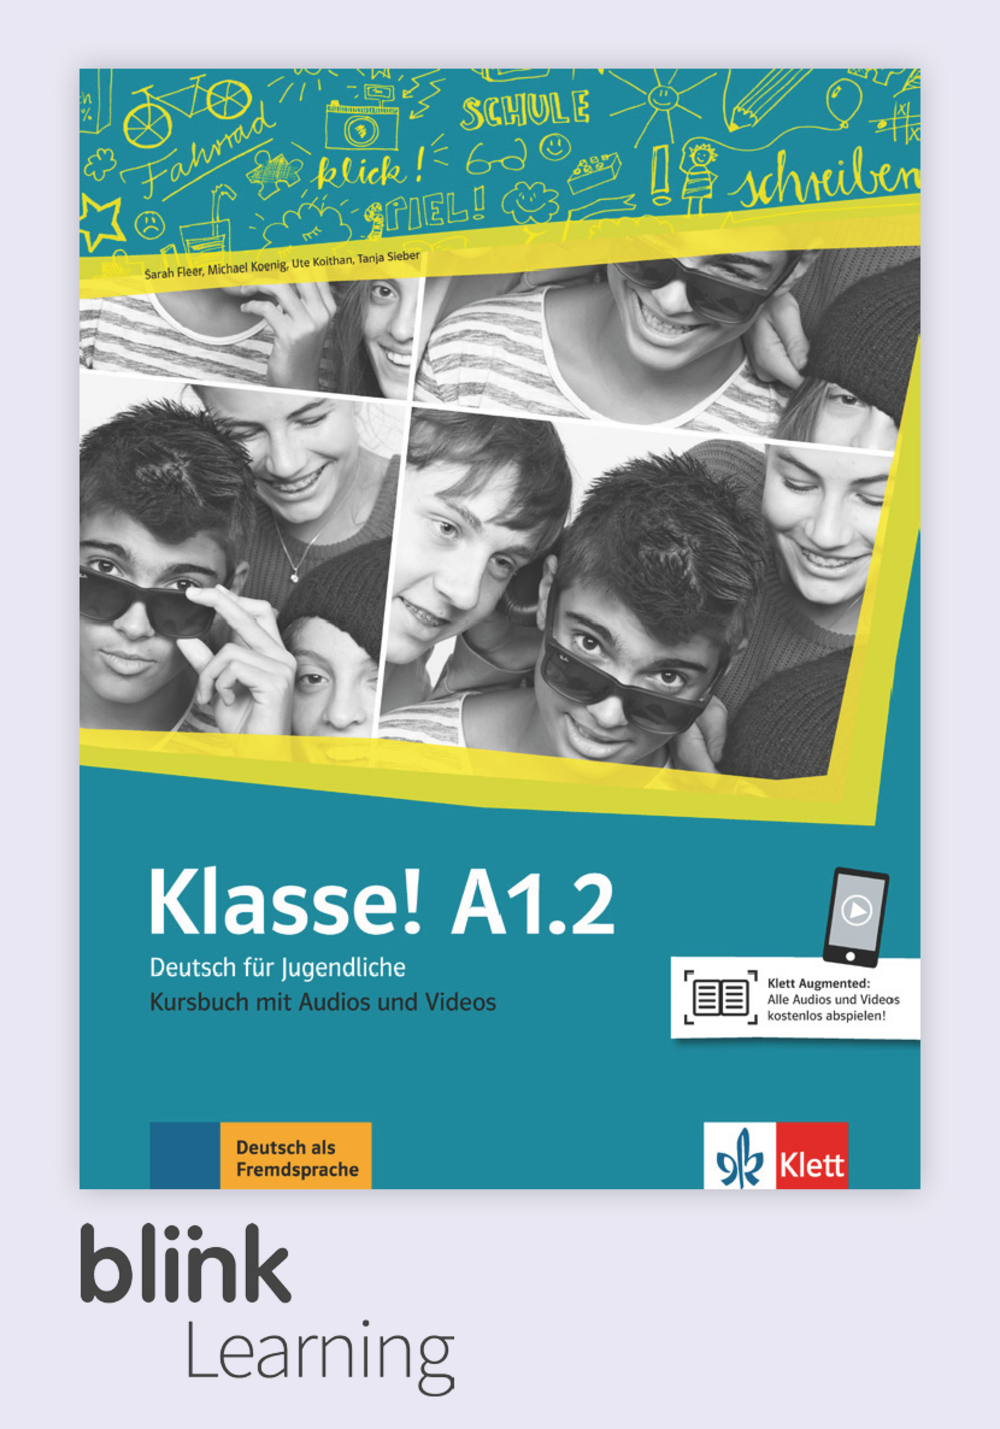 Klasse! A1.2 Digital Kursbuch fur Unterrichtende / Цифровой учебник для учителя